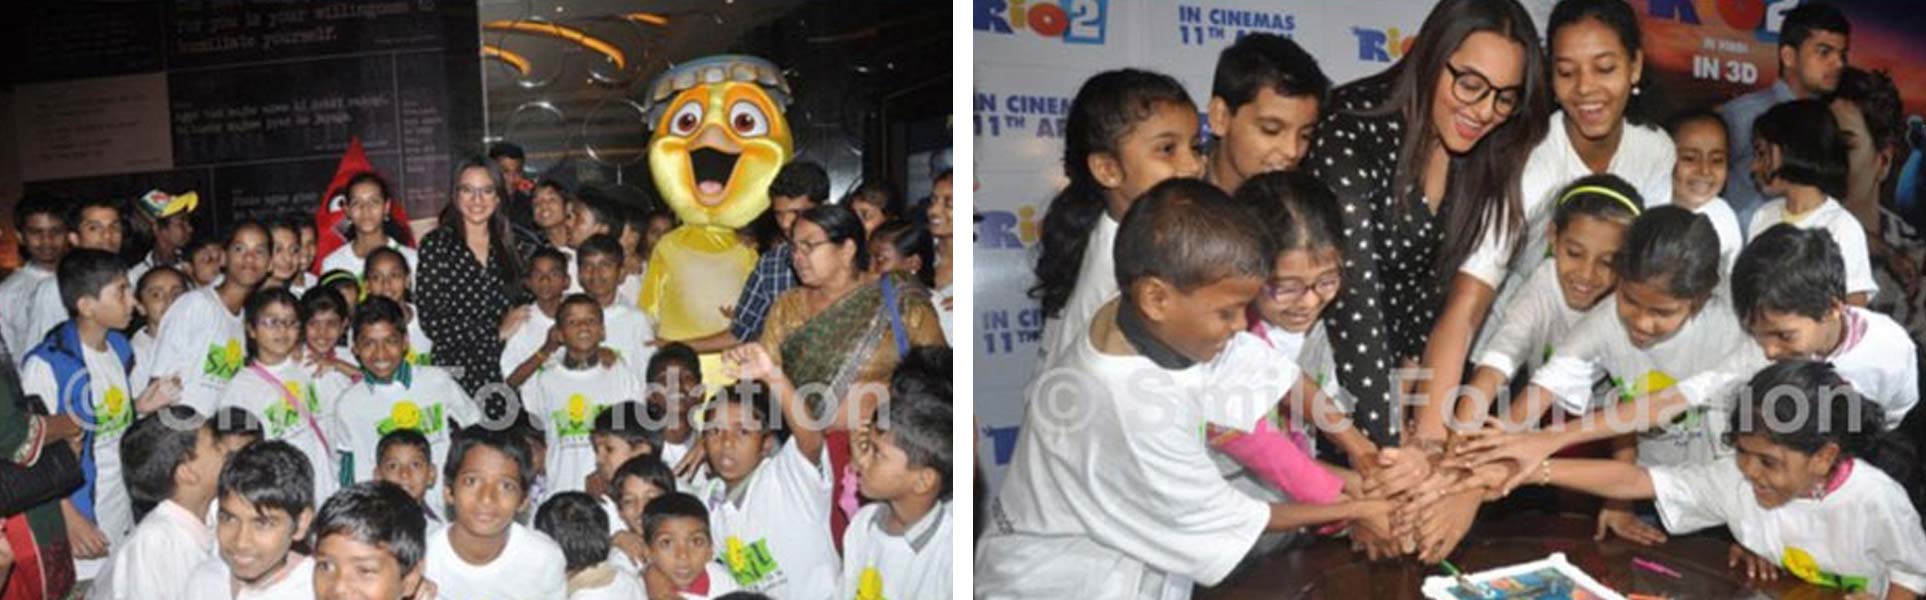 Sonakshi Sinha organizes special screening of Rio 2 for Smile kids